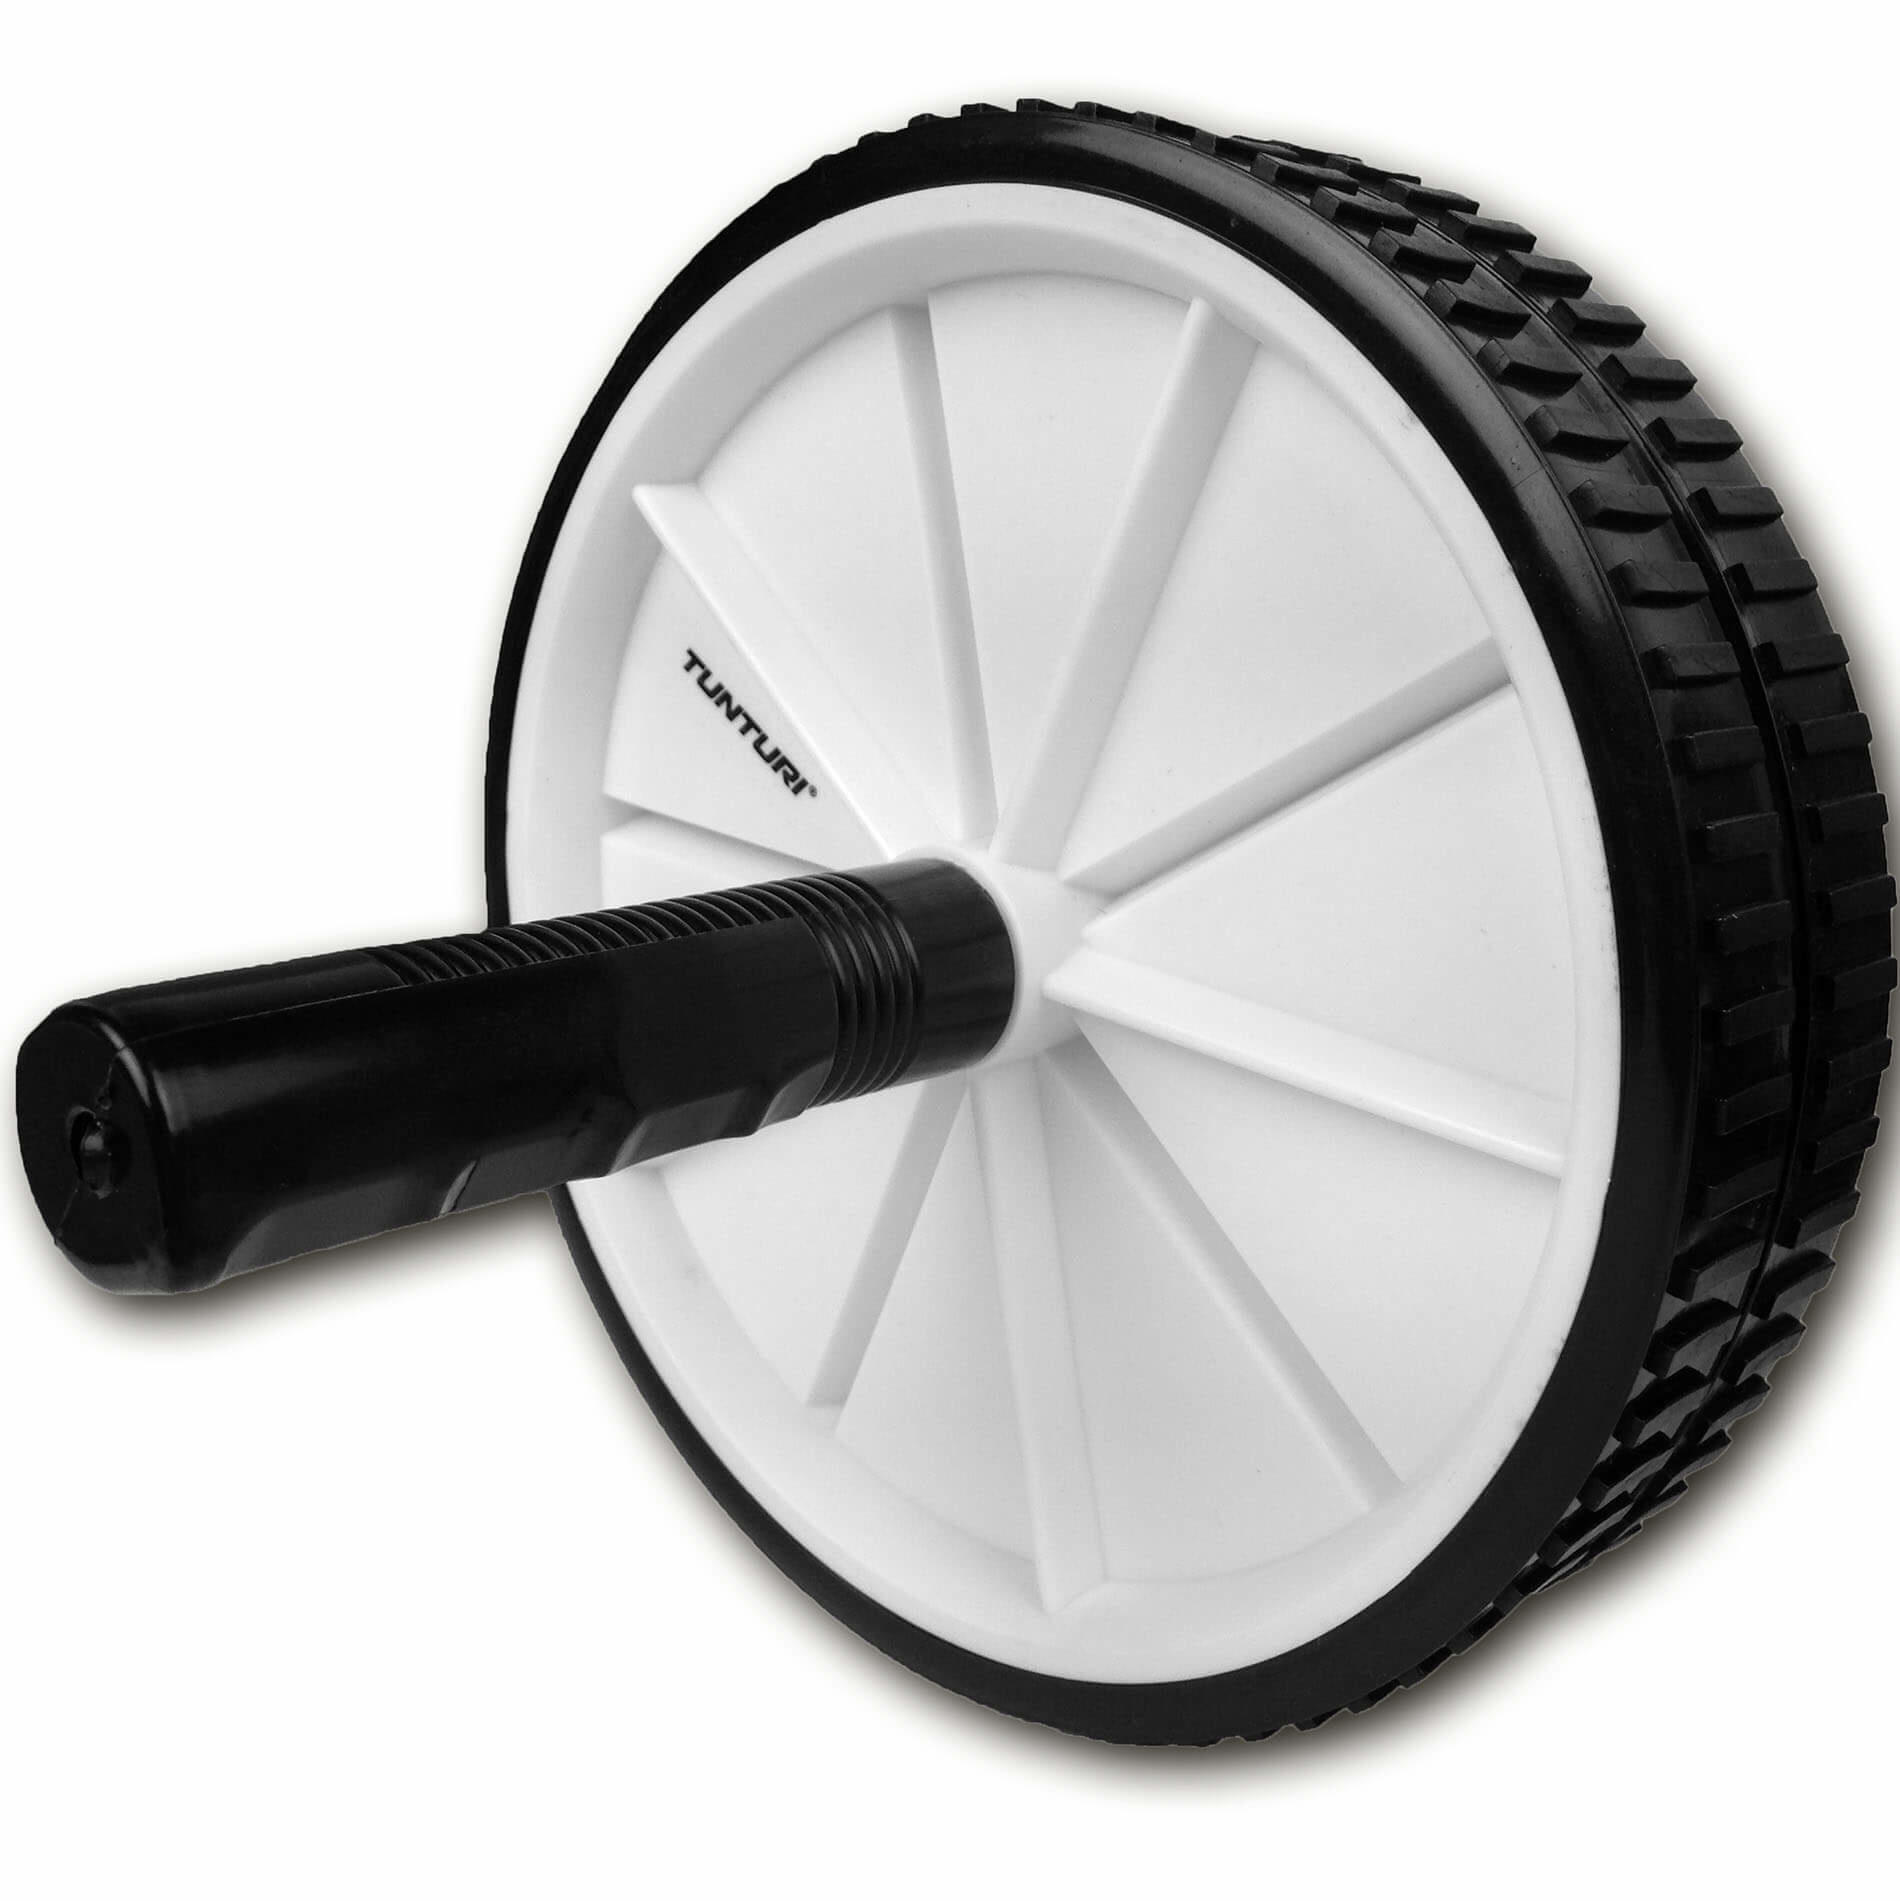 Double Exercise Wheel - Abdominal Wheel - Trainings Wheel - Black